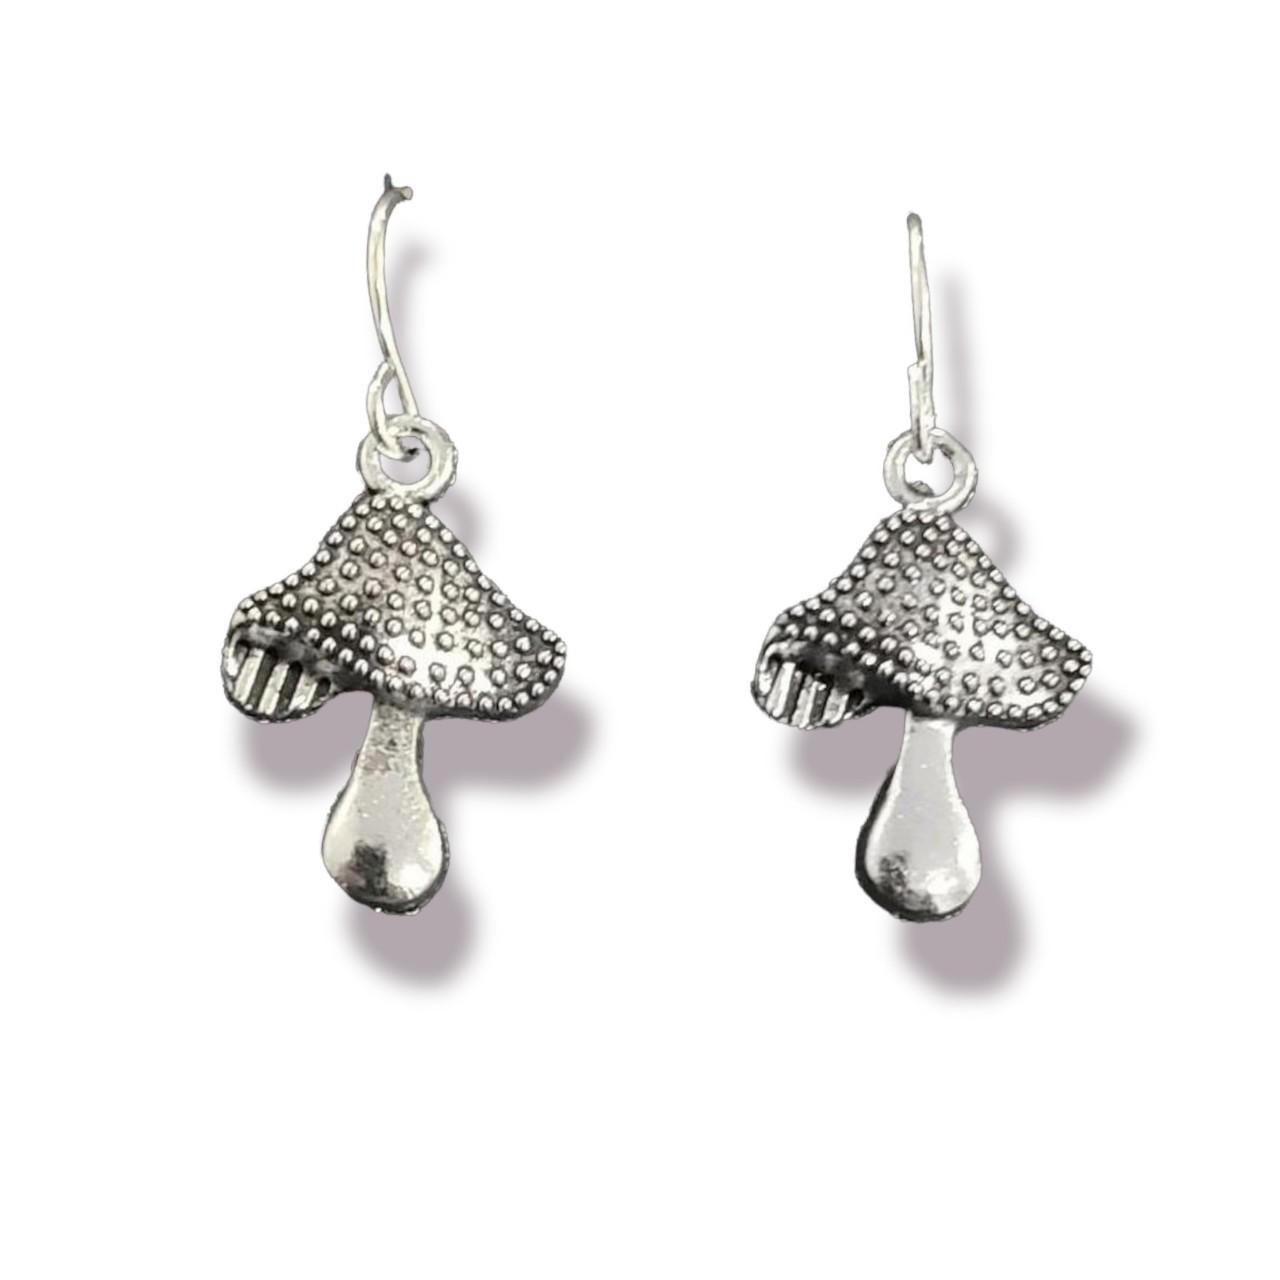 Product Image 1 - Silver Mushroom Earrings 003
..
Small Silver-tone